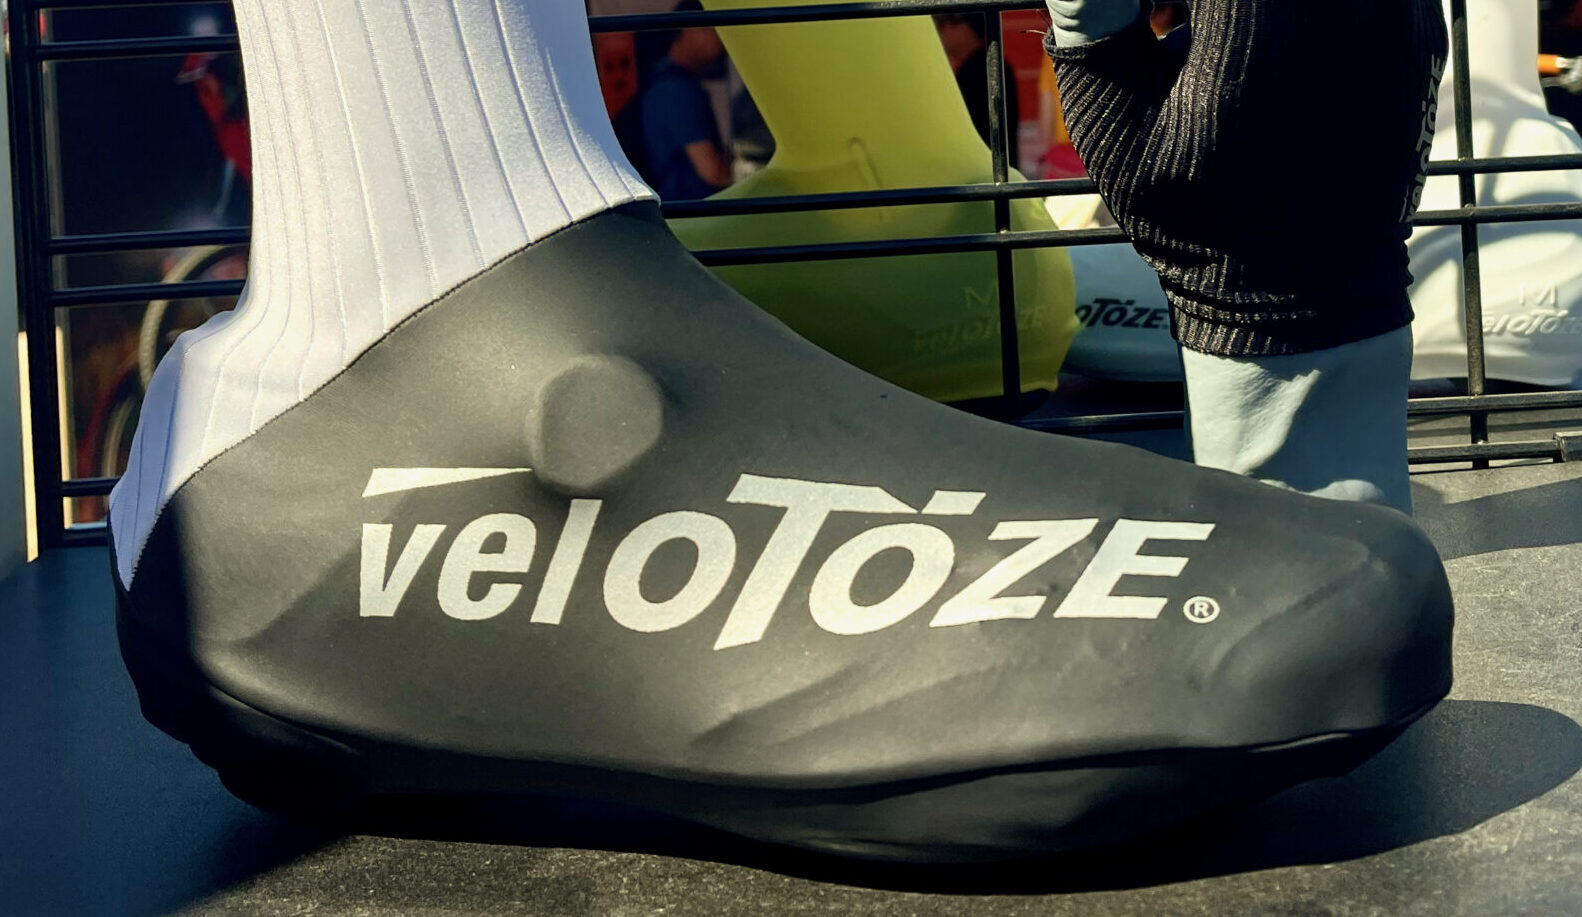 VeloToze Shows New Cycling Kits and Improved Aero Sock Designs - Bikerumor